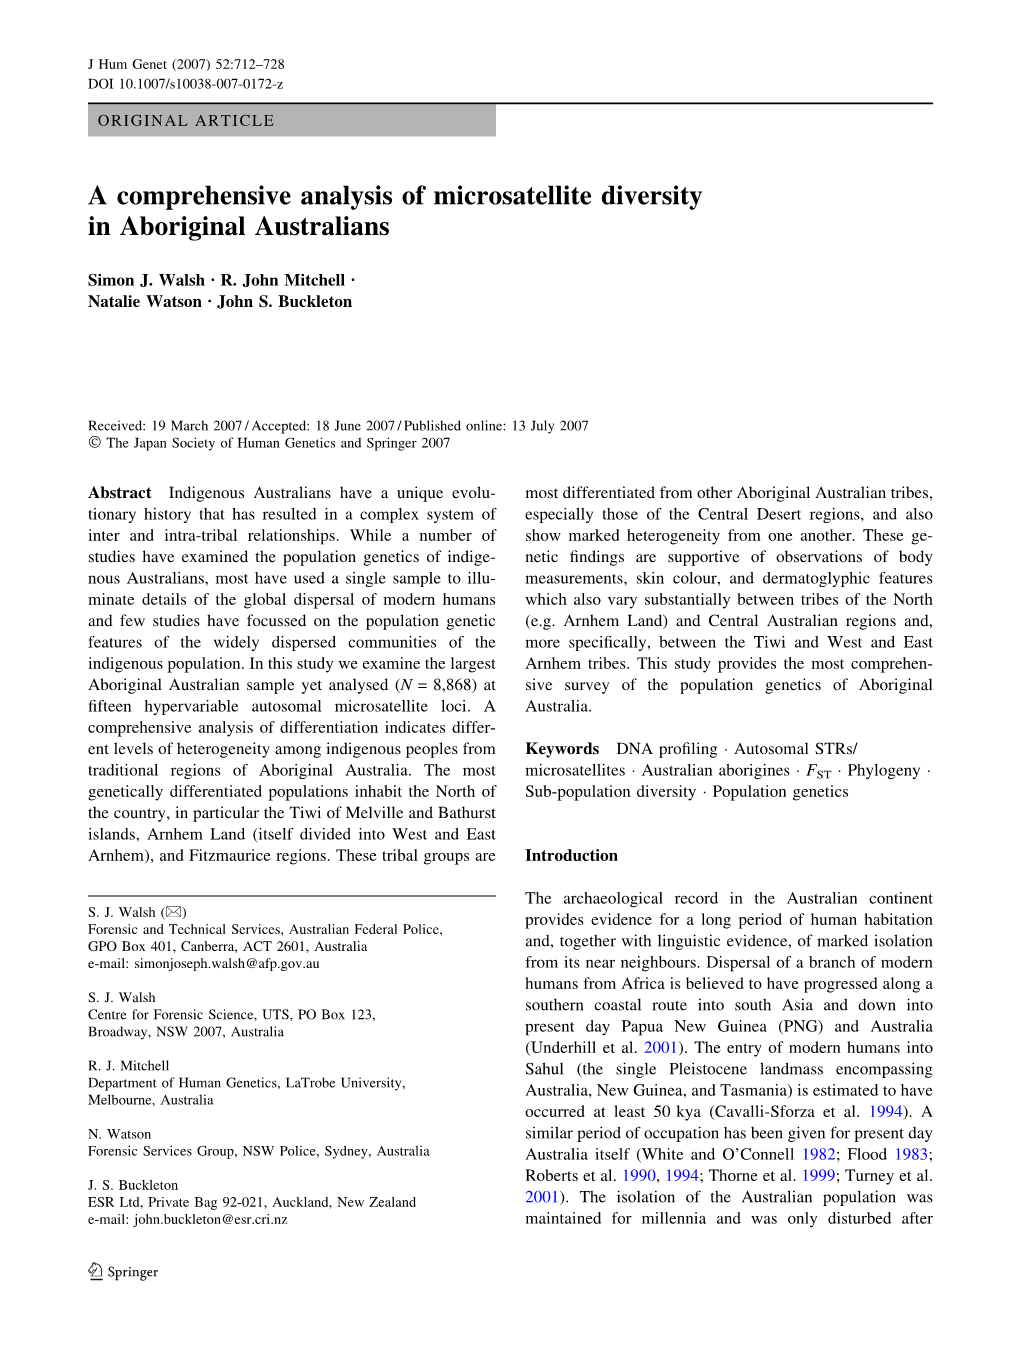 A Comprehensive Analysis of Microsatellite Diversity in Aboriginal Australians